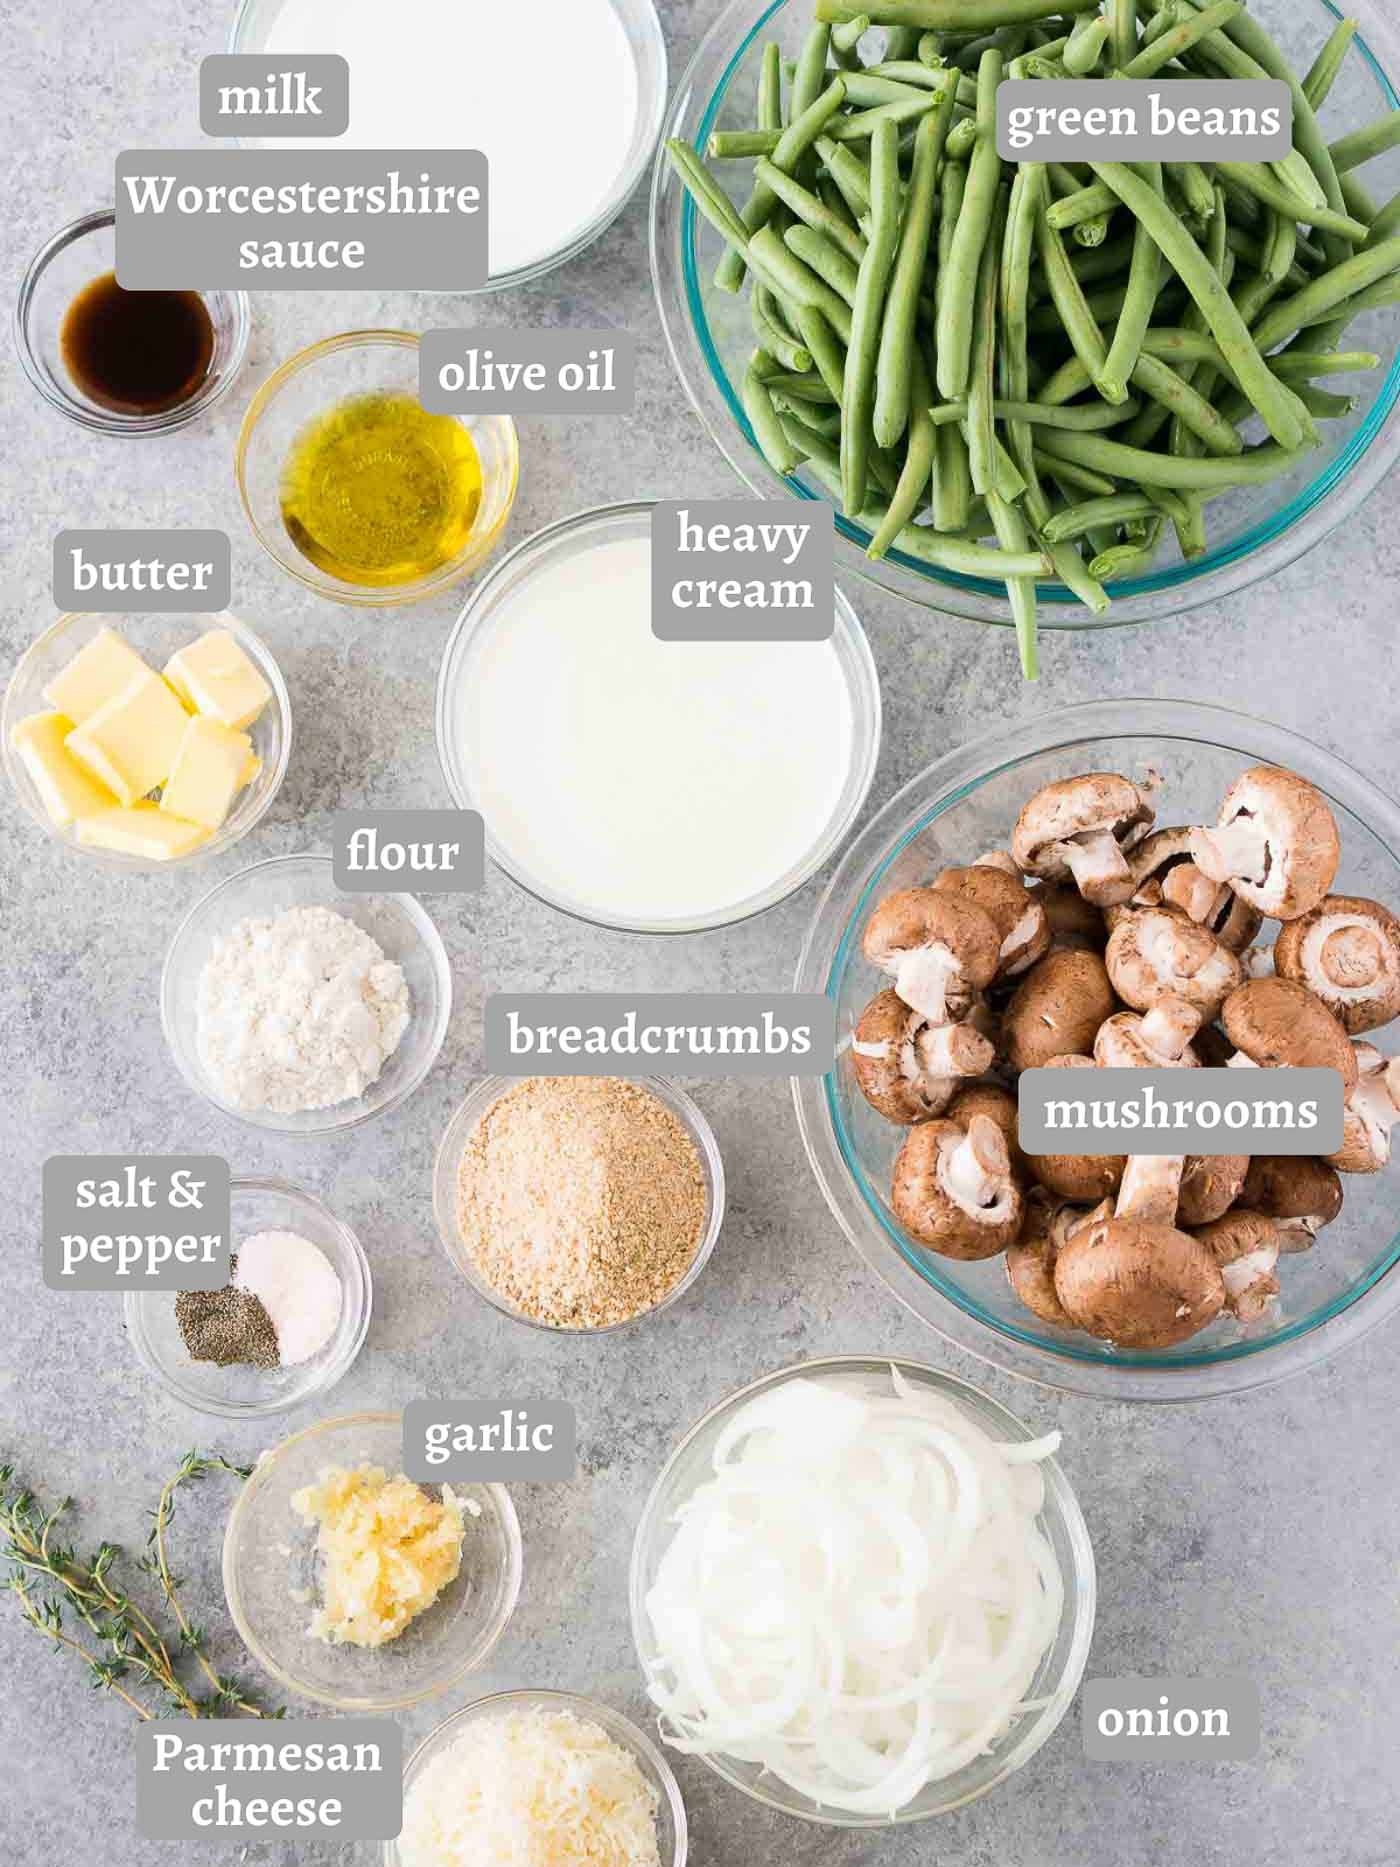 green beans casserole ingredients